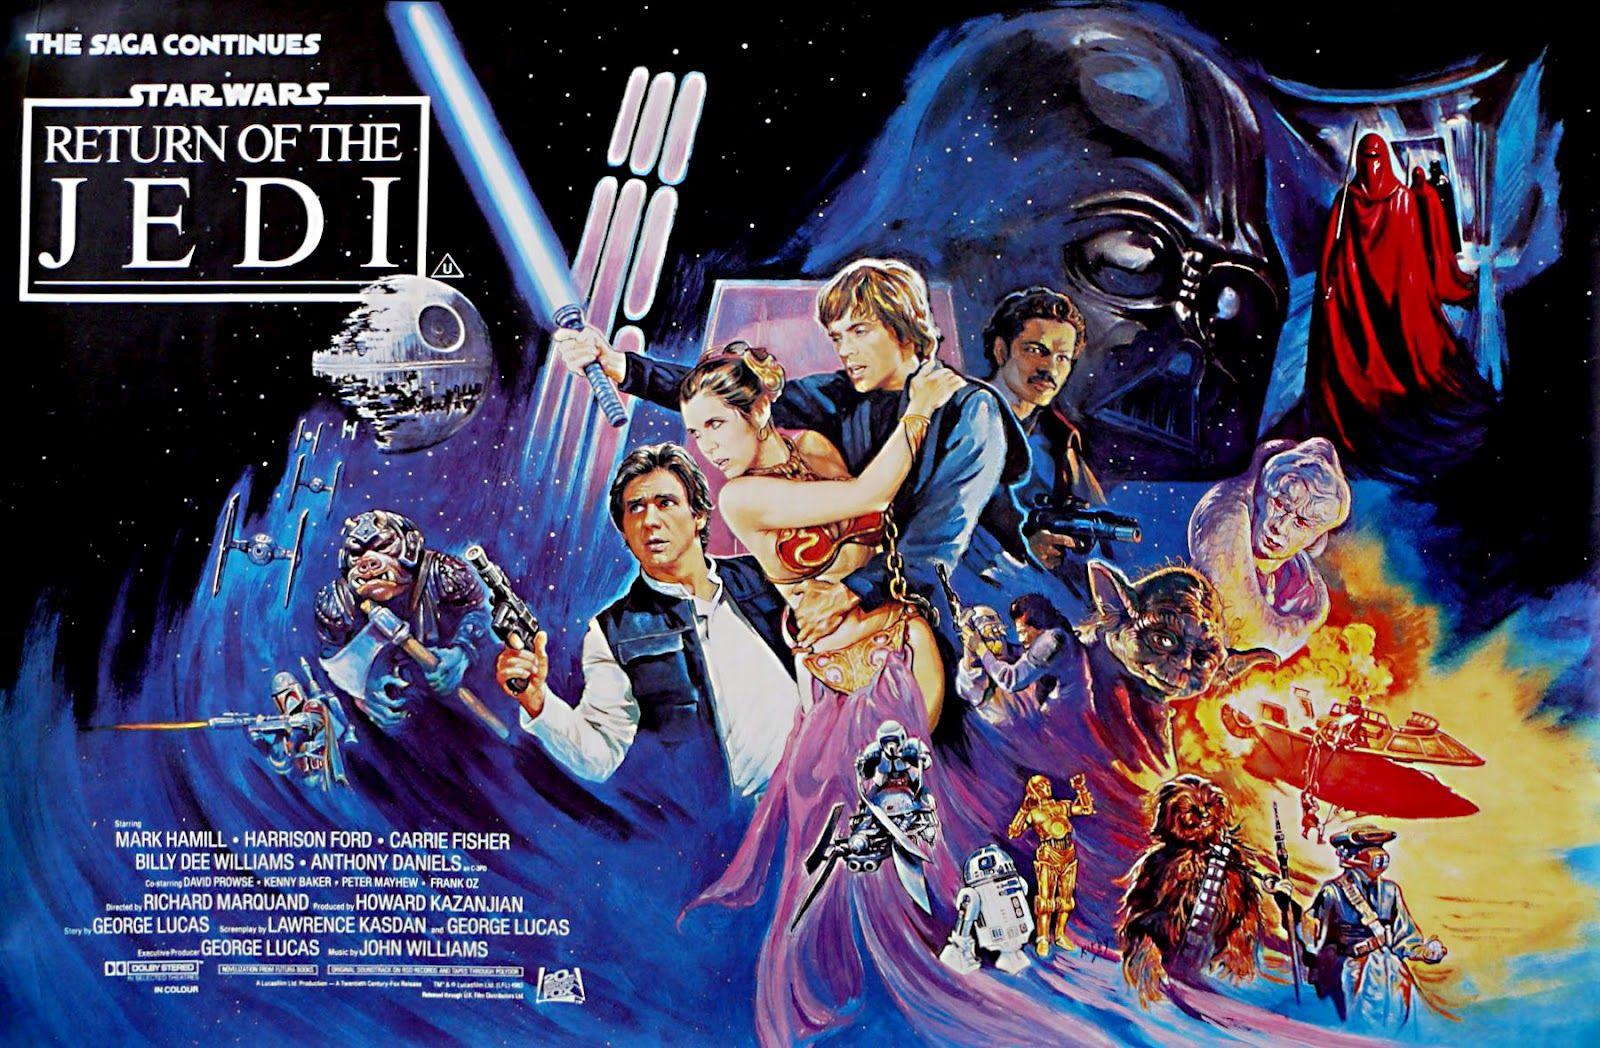 Star Wars Return Of The Jedi Wallpaper Full HD For Computer Episode